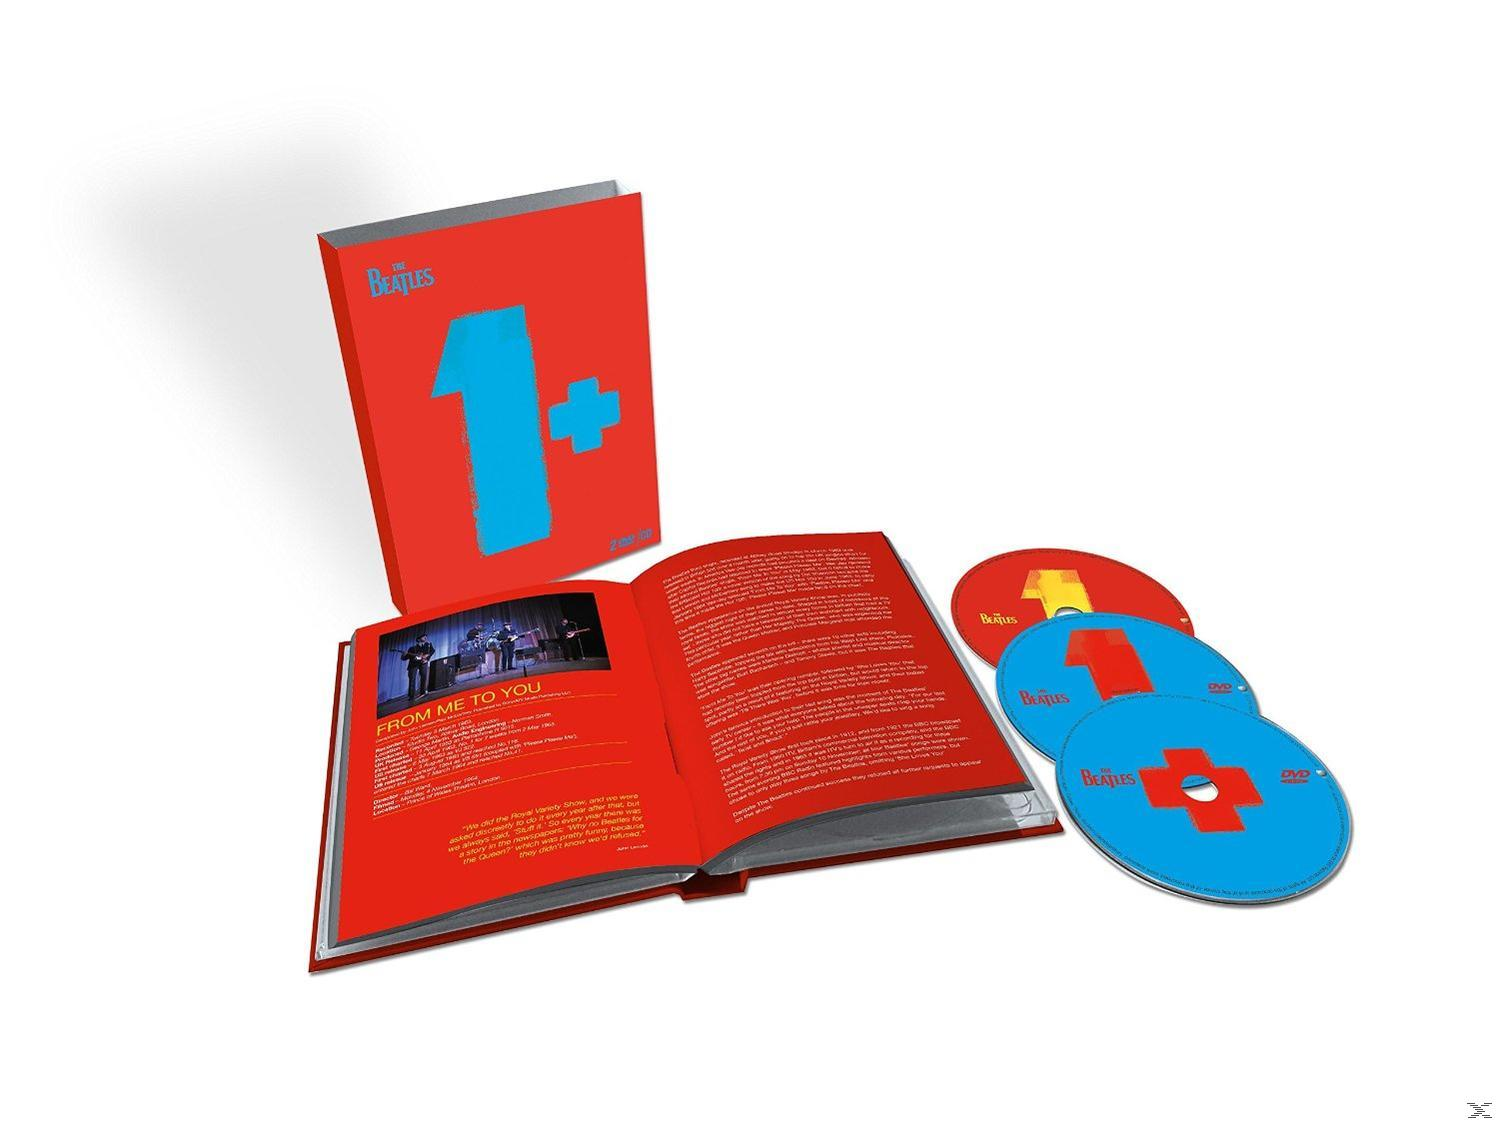 The Beatles - 1 (LTD (CD Edition Video) - + CD+2DVD) Deluxe DVD